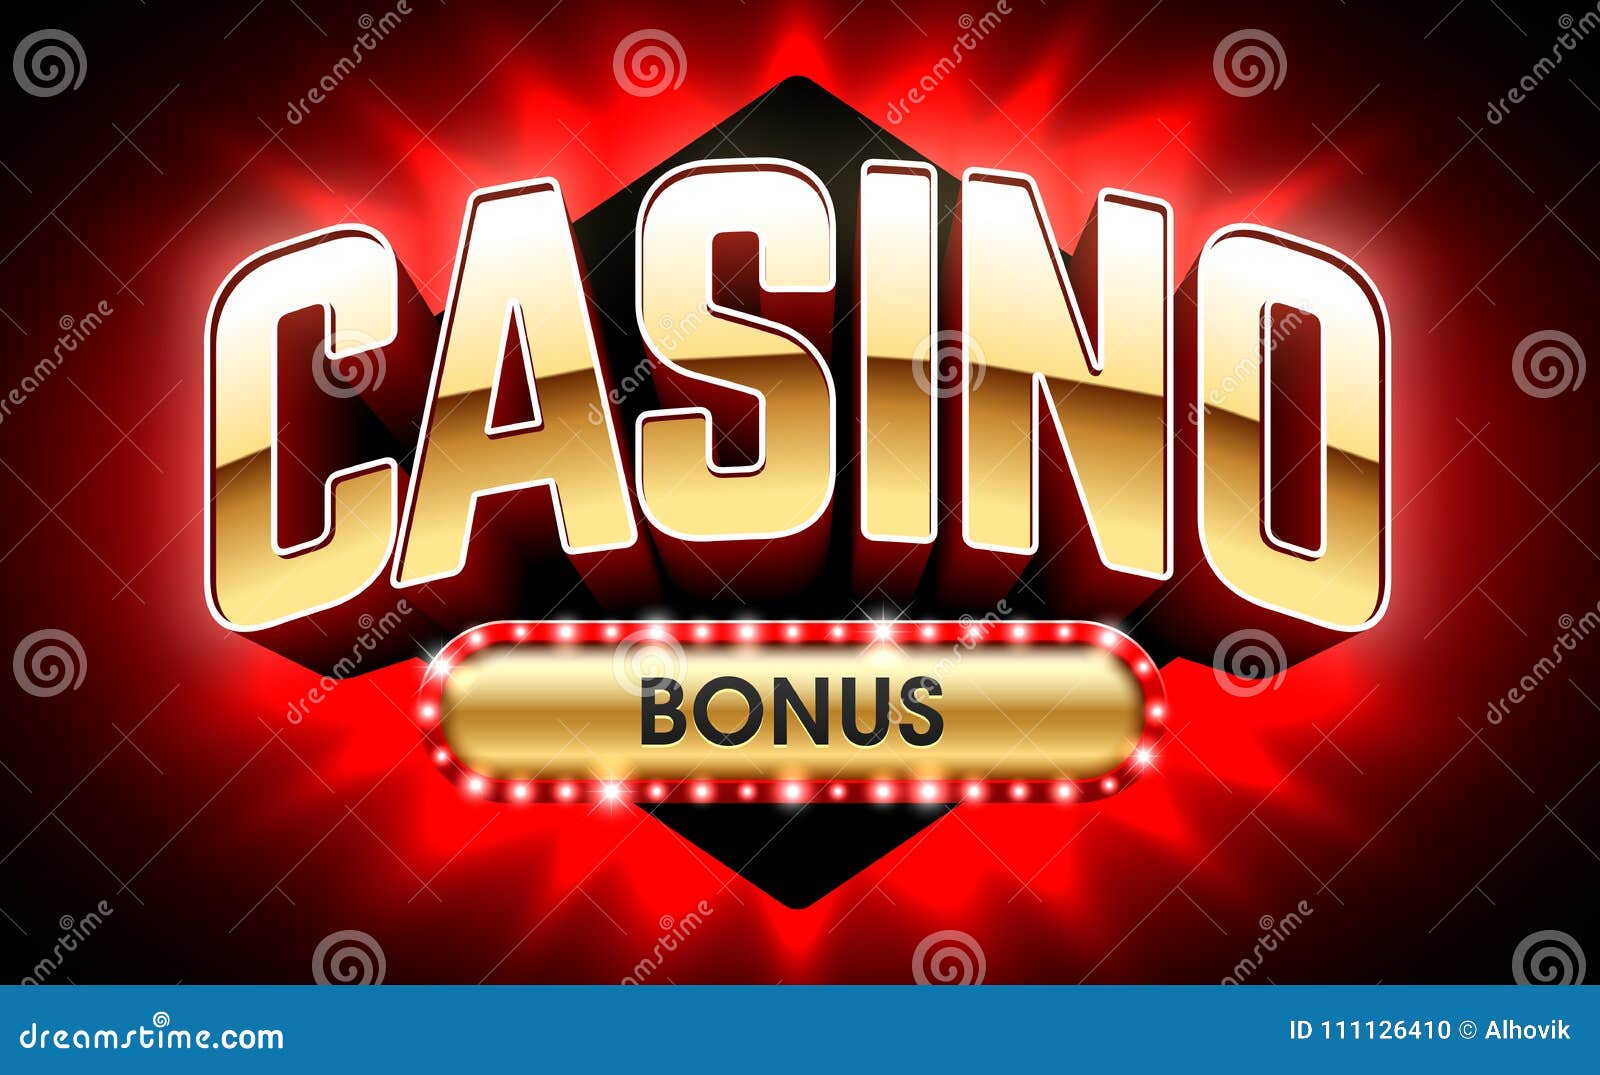 Welcome Bonus Casino